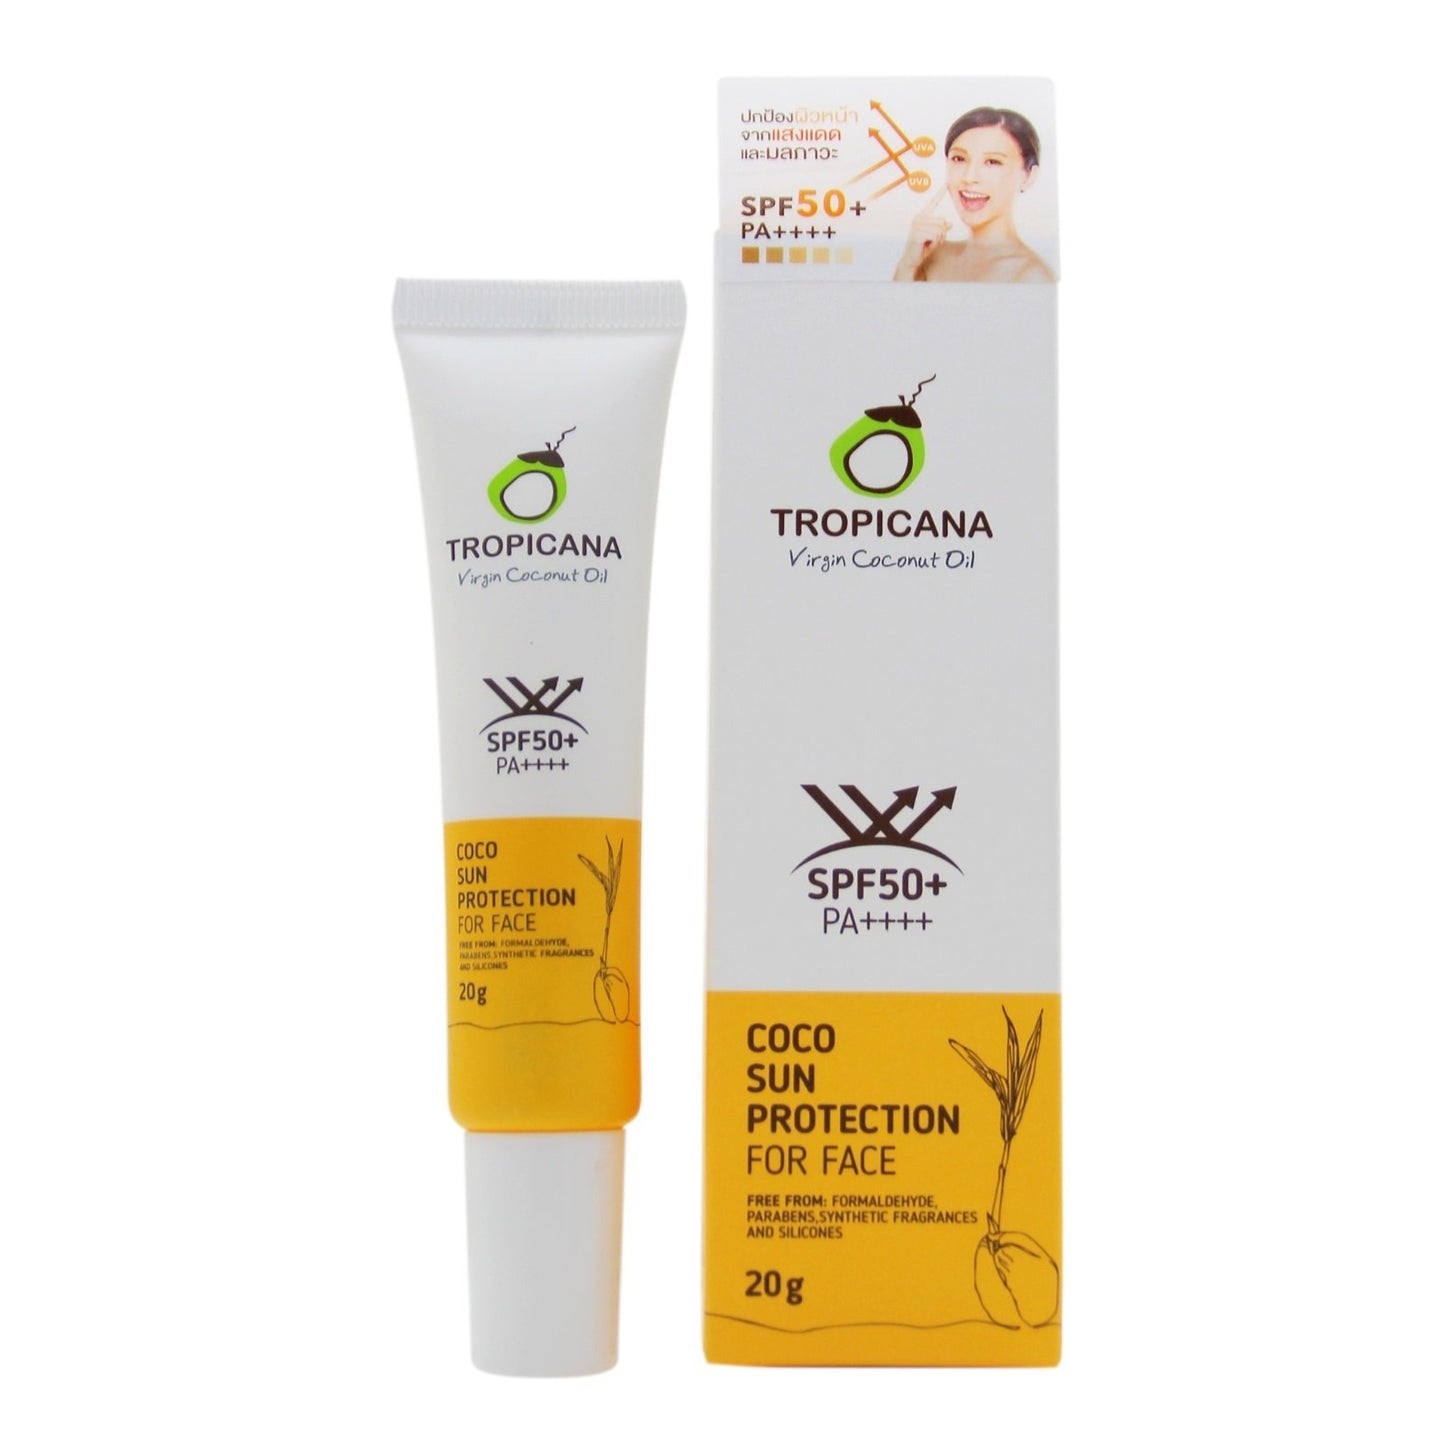 Tropicana Coco Sun Protection for Face 20g [EXP 8 OCT 2020] - WERONE